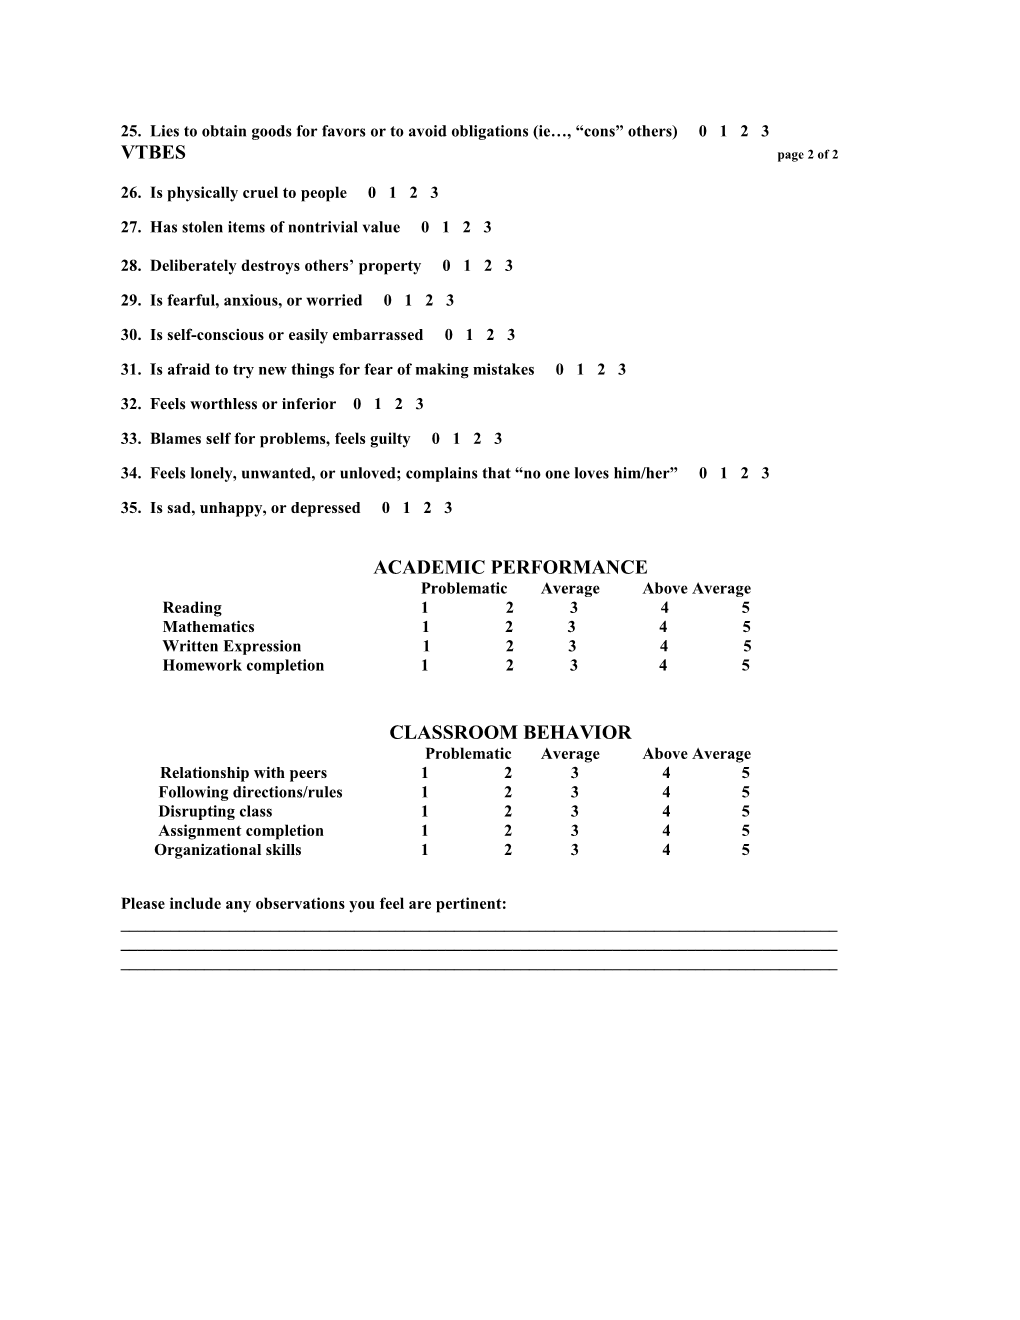 VANDERBILT TEACHER BEHAVIOR EVALUATION SCALE (VTBES) Page 1 of 2